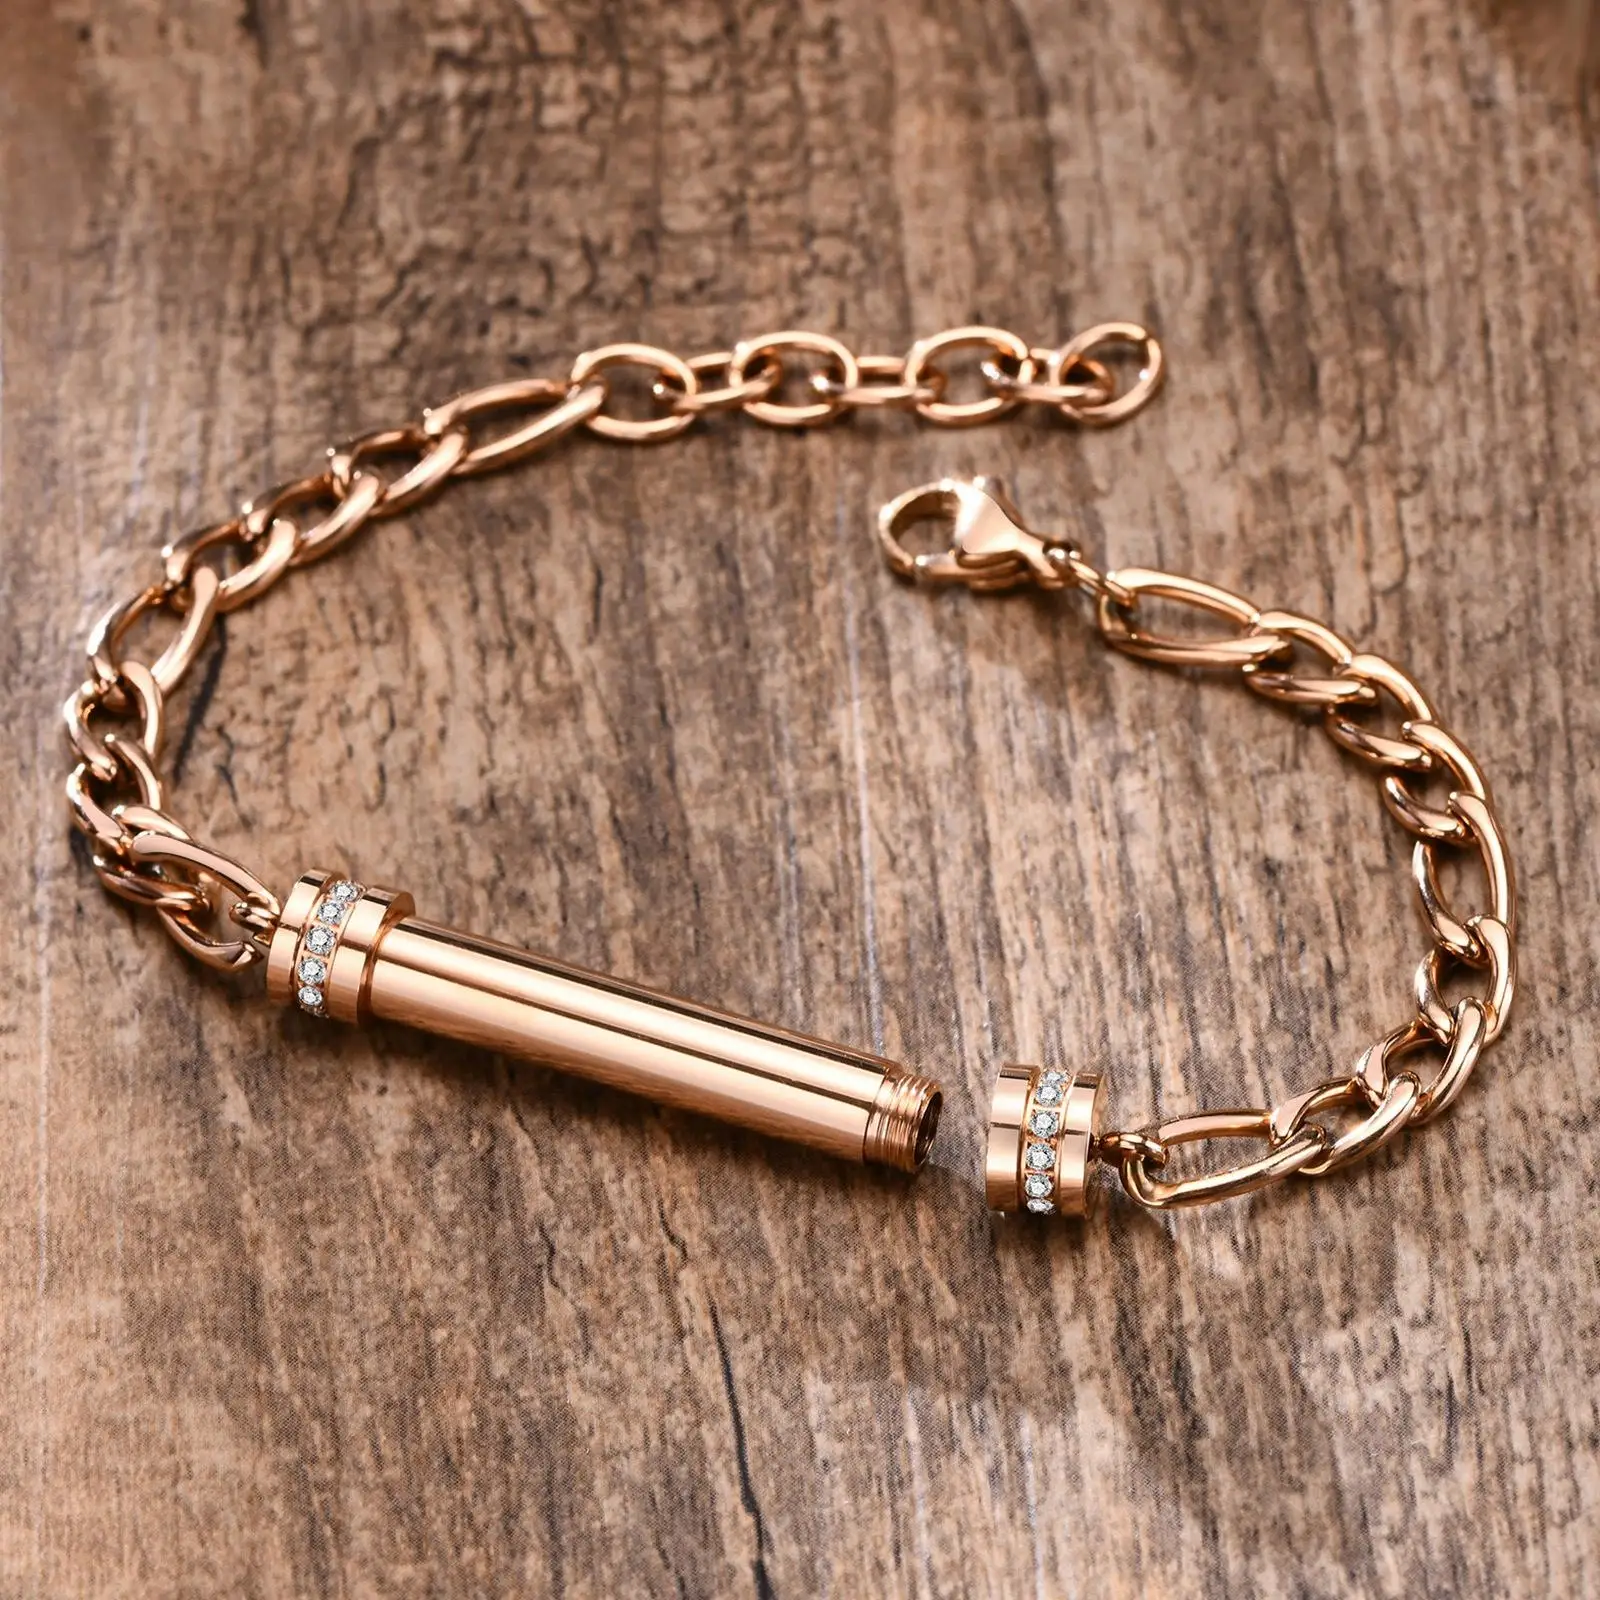 Cremation Bracelet Length Adjustable Bling Crystal Memorial Bangle for Ashes Jewelry Gift Rose Gold